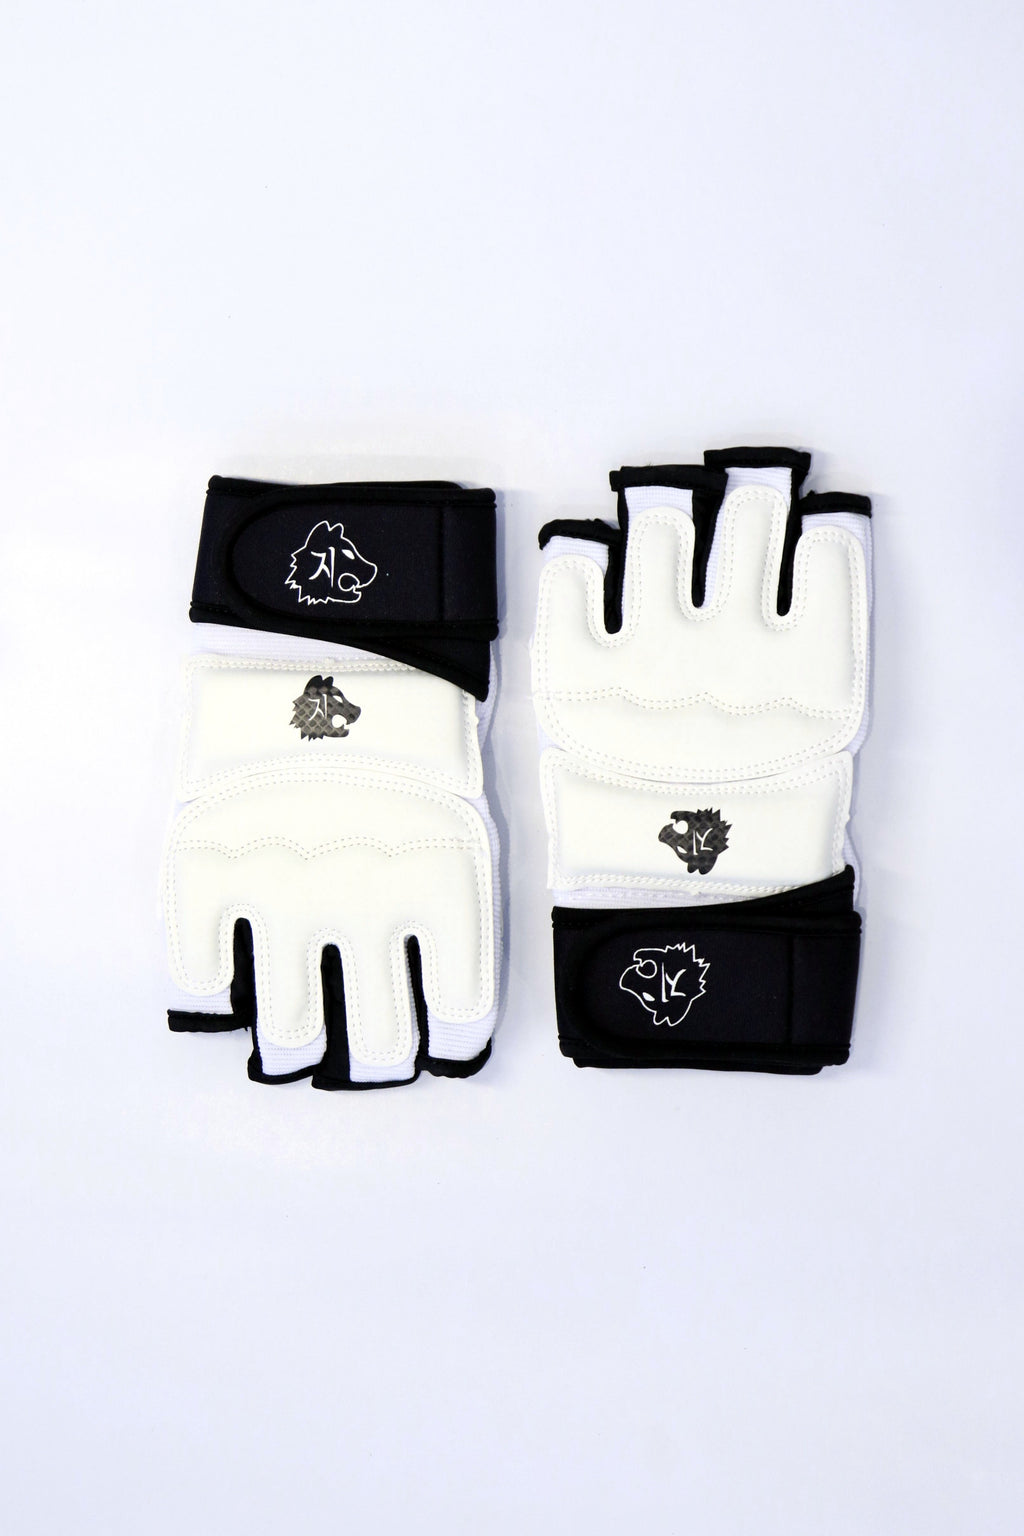 Zido World Taekwondo (WT) Style Glove